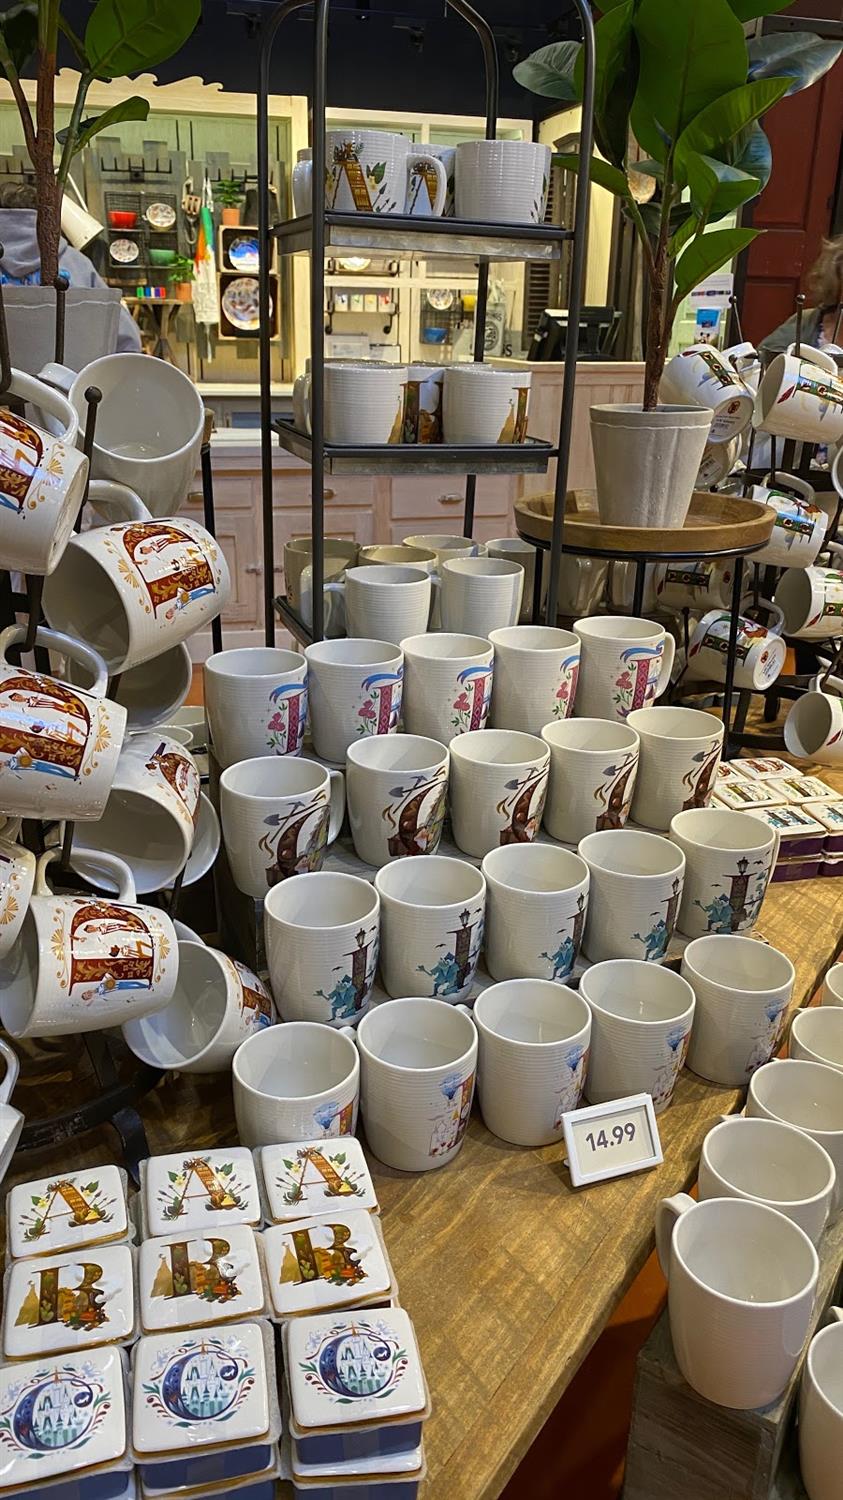 https://www.laughingplace.com/w/wp-content/uploads/2020/03/new-abcdisney-mug-collection-now-available-at-disneyland-resort-walt-disney-world.jpeg